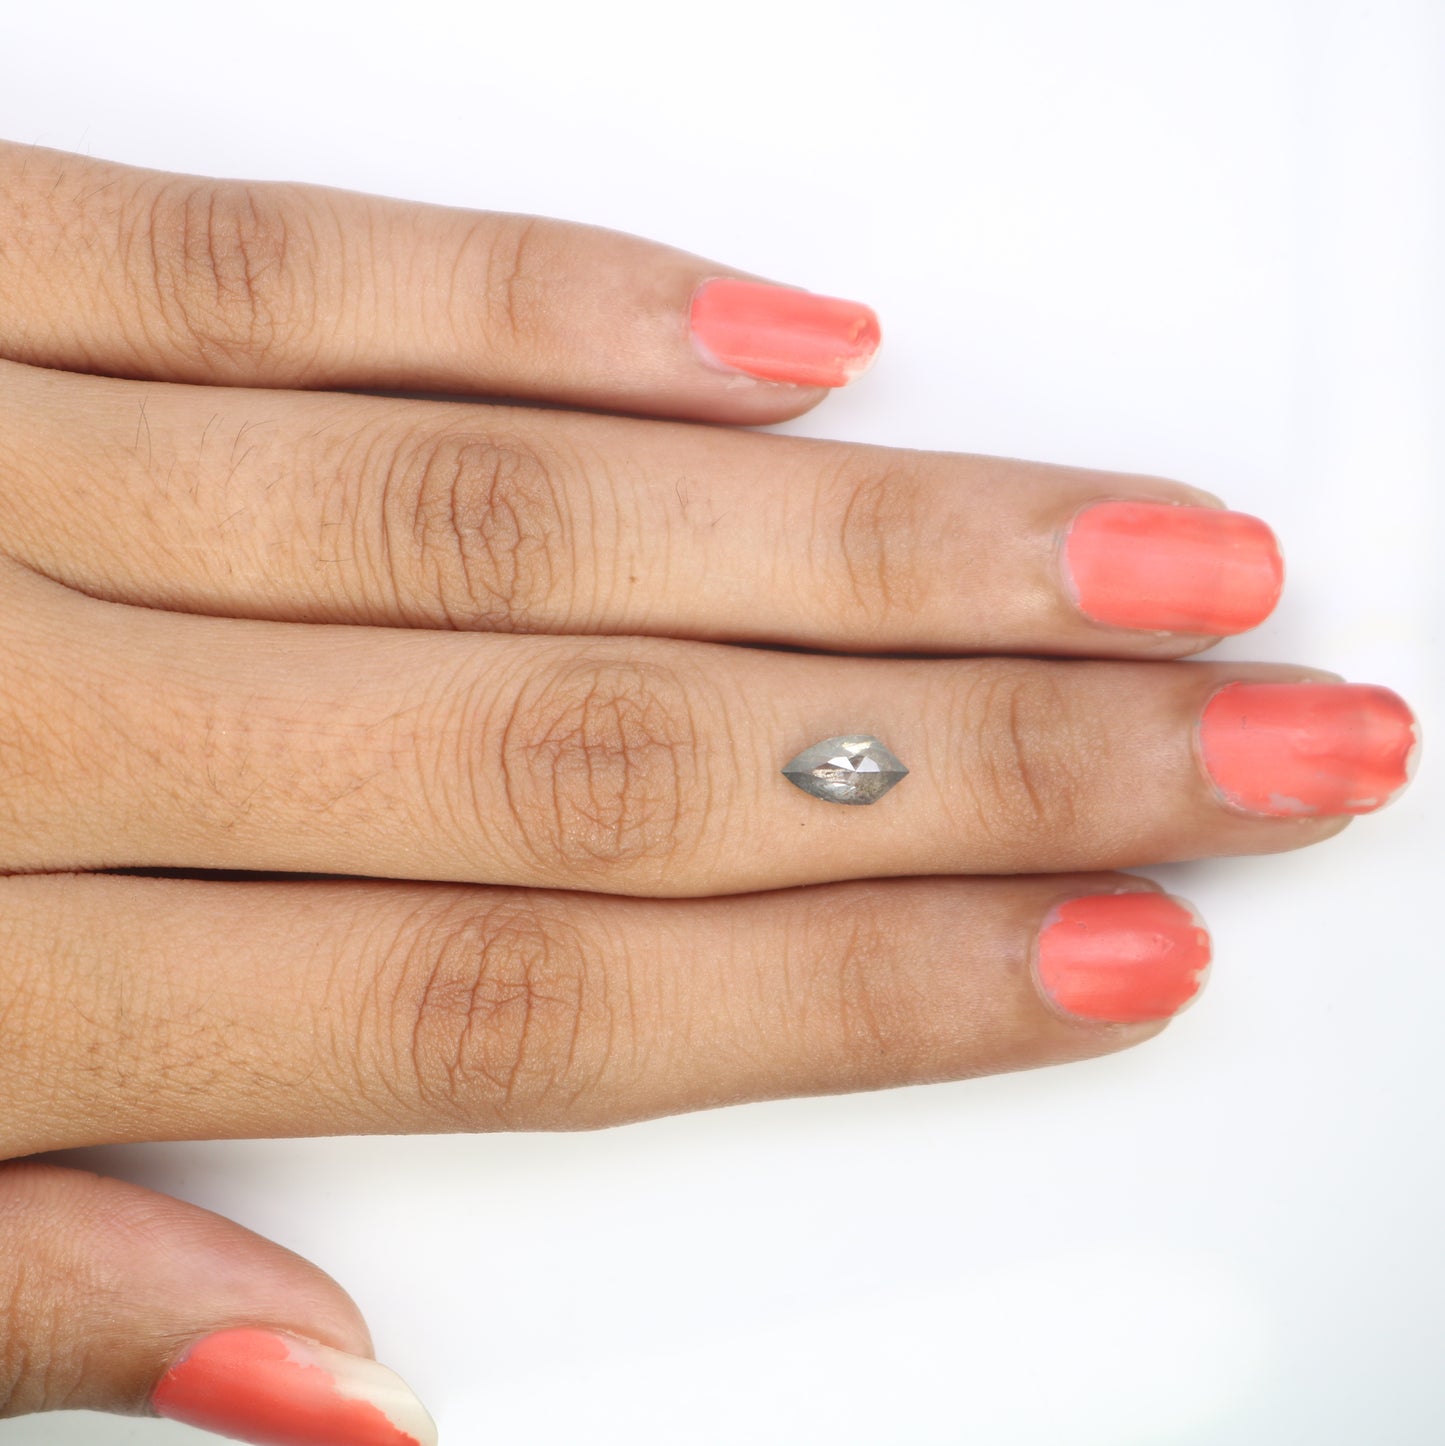 0.71 Carat Geometric Shape 8.30 MM Salt And Pepper Diamond For Wedding Ring